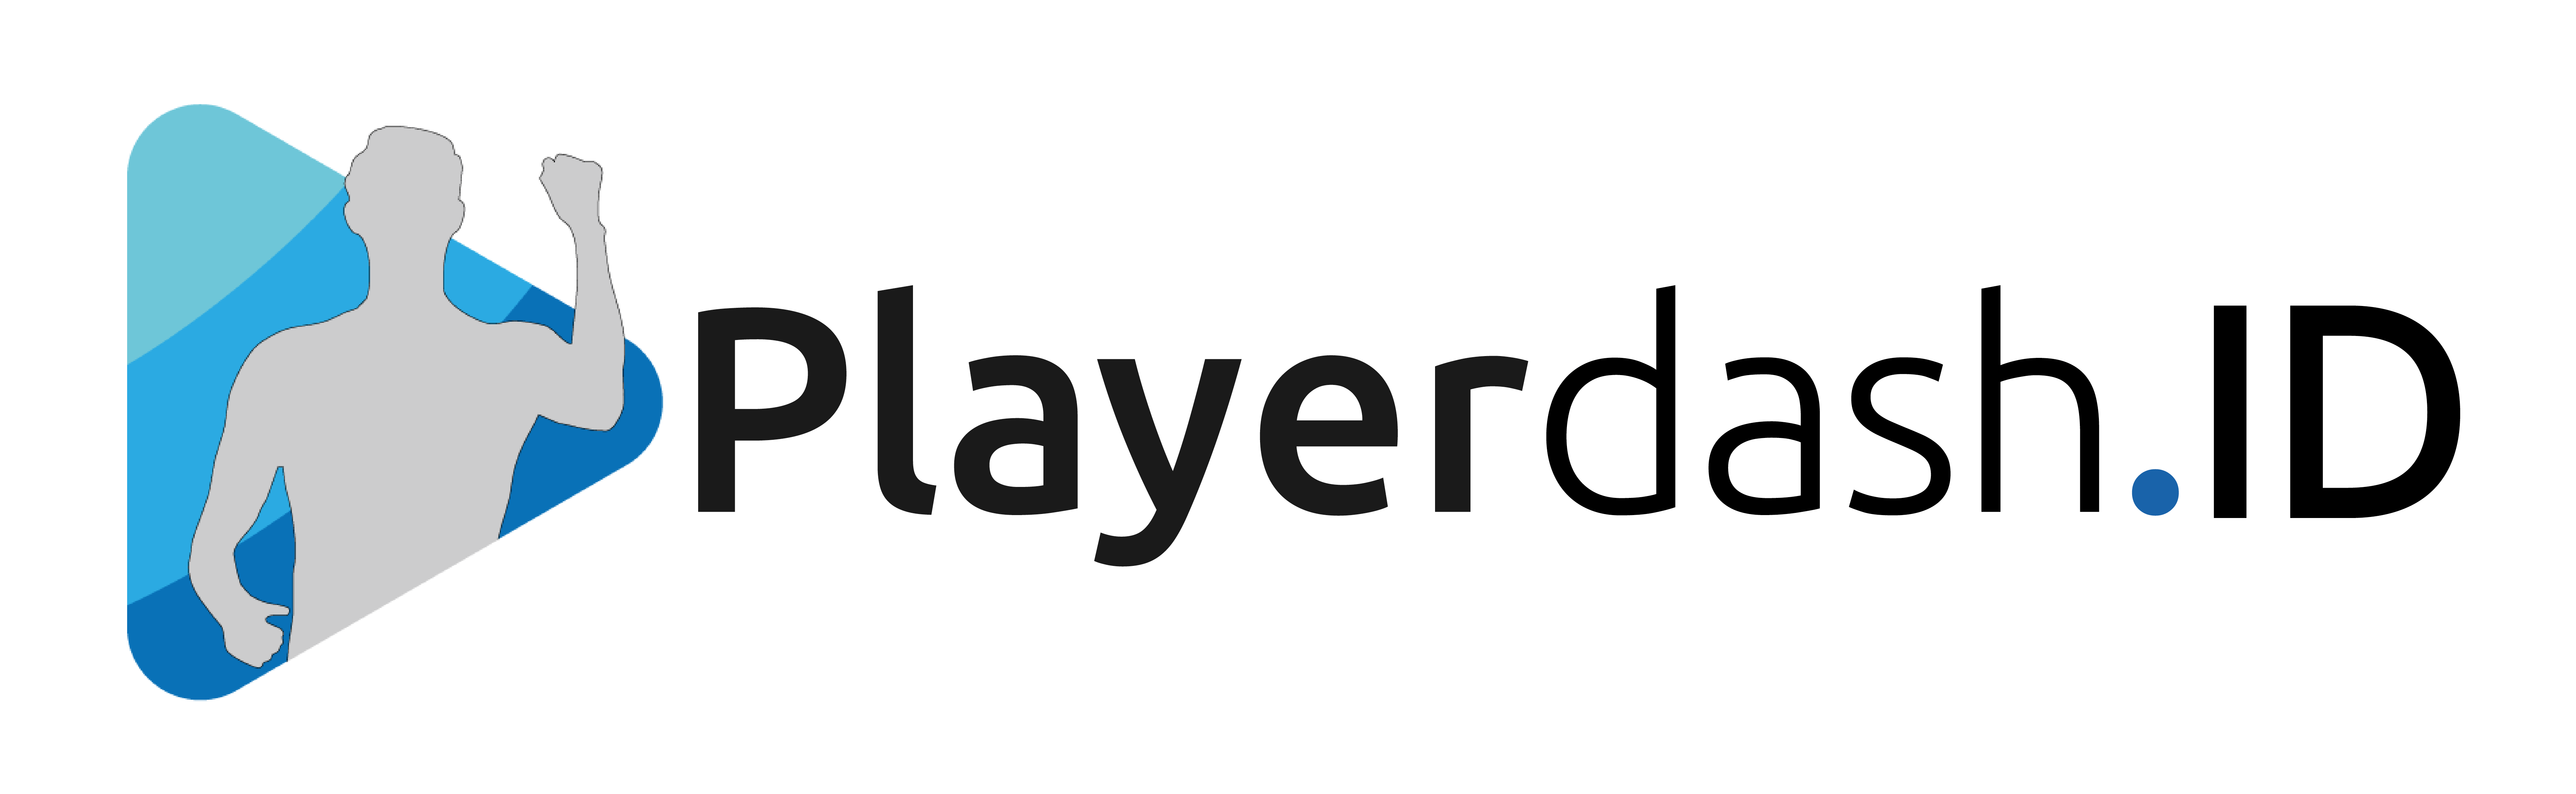 Playerdash.ID